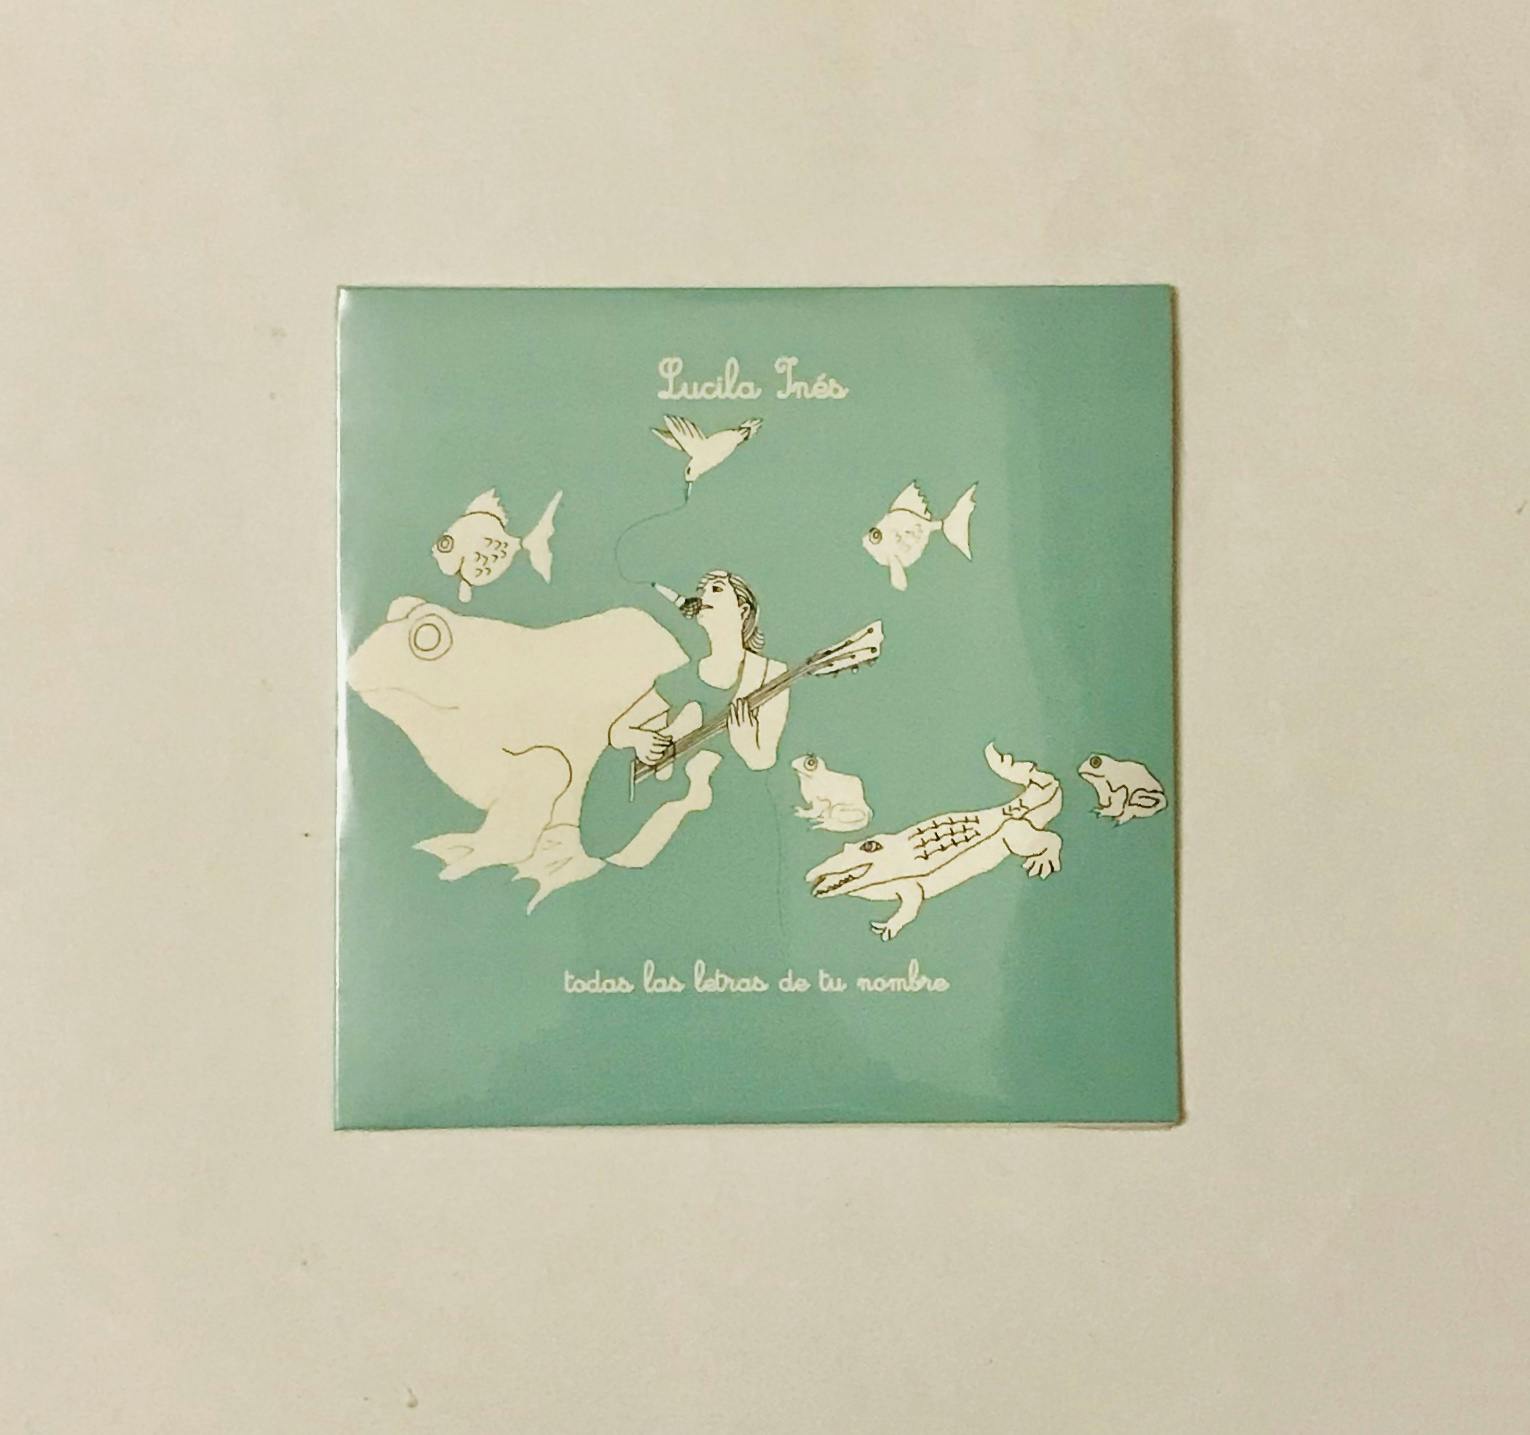 "TODAS LAS LETRAS DE TU NOMBRE", CD de Lucila Inés